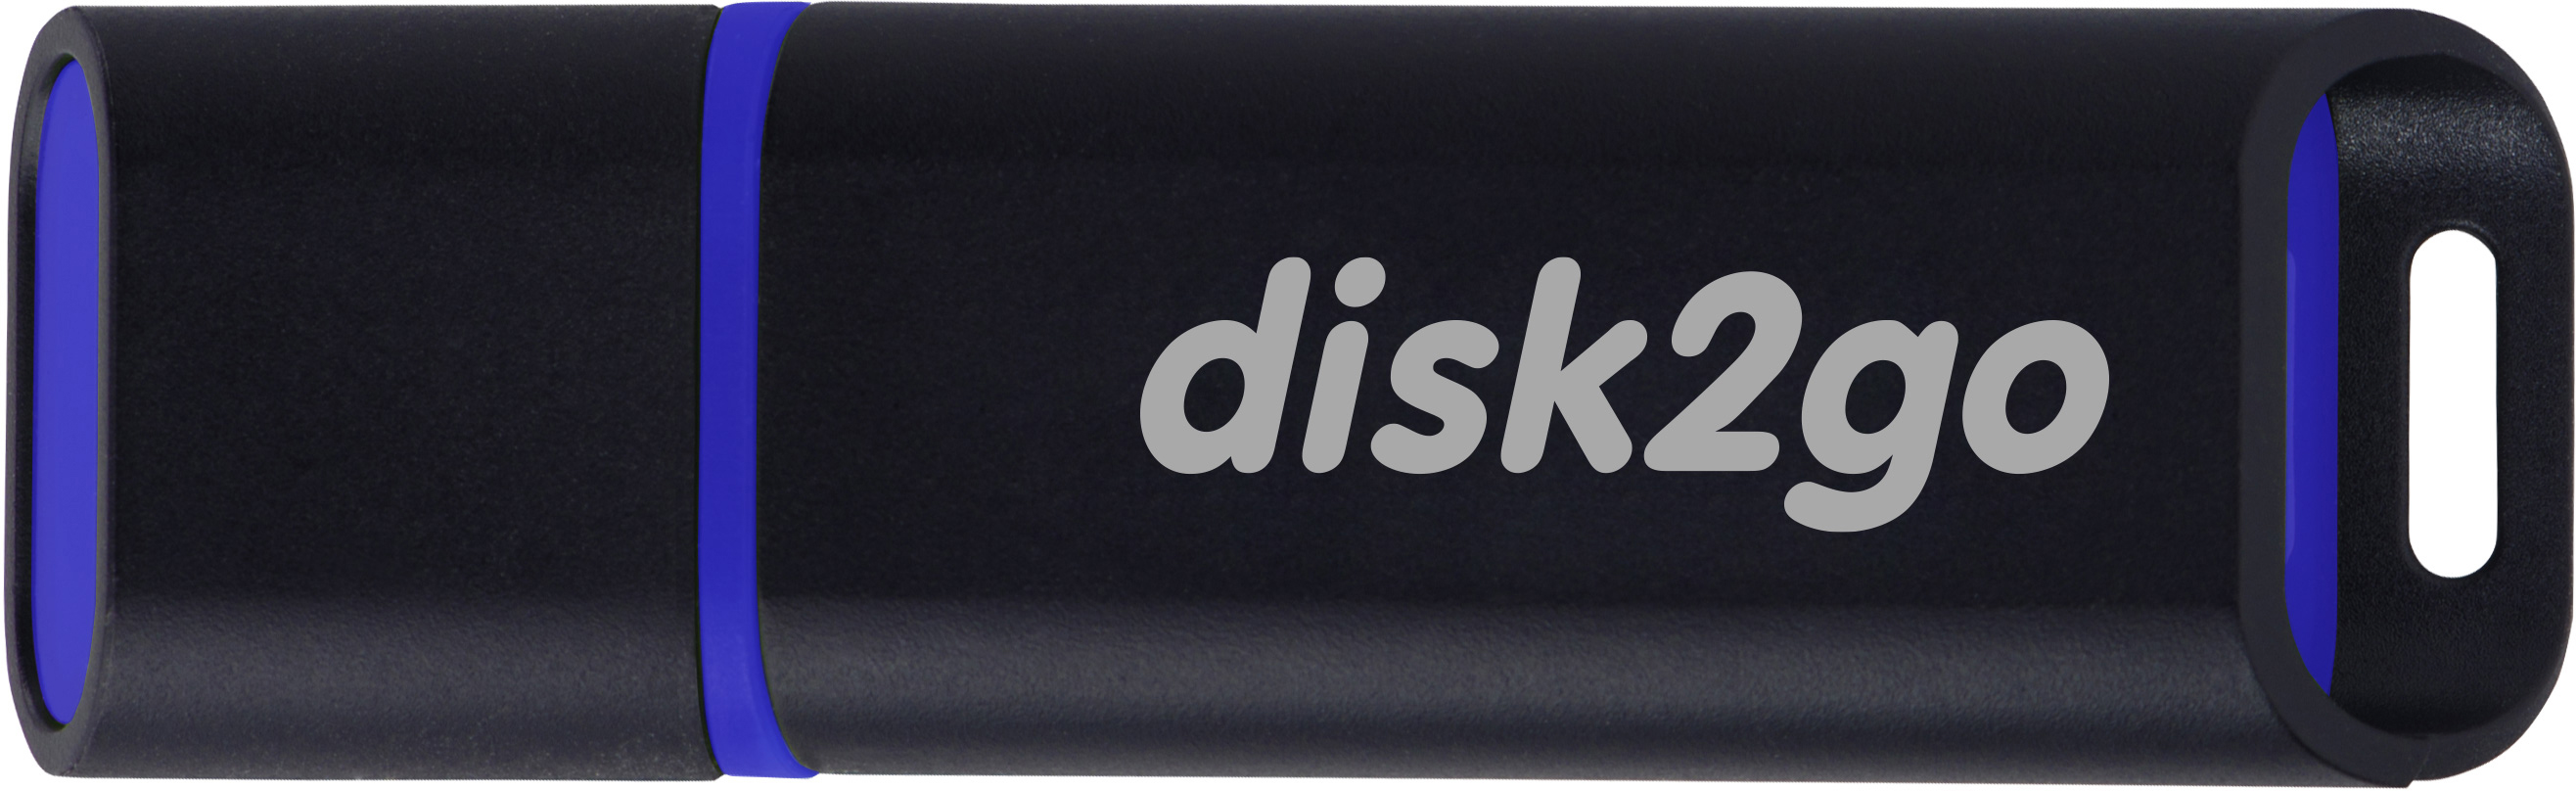 DISK2GO USB-Stick passion 3.0 32GB 30006494 USB 3.0